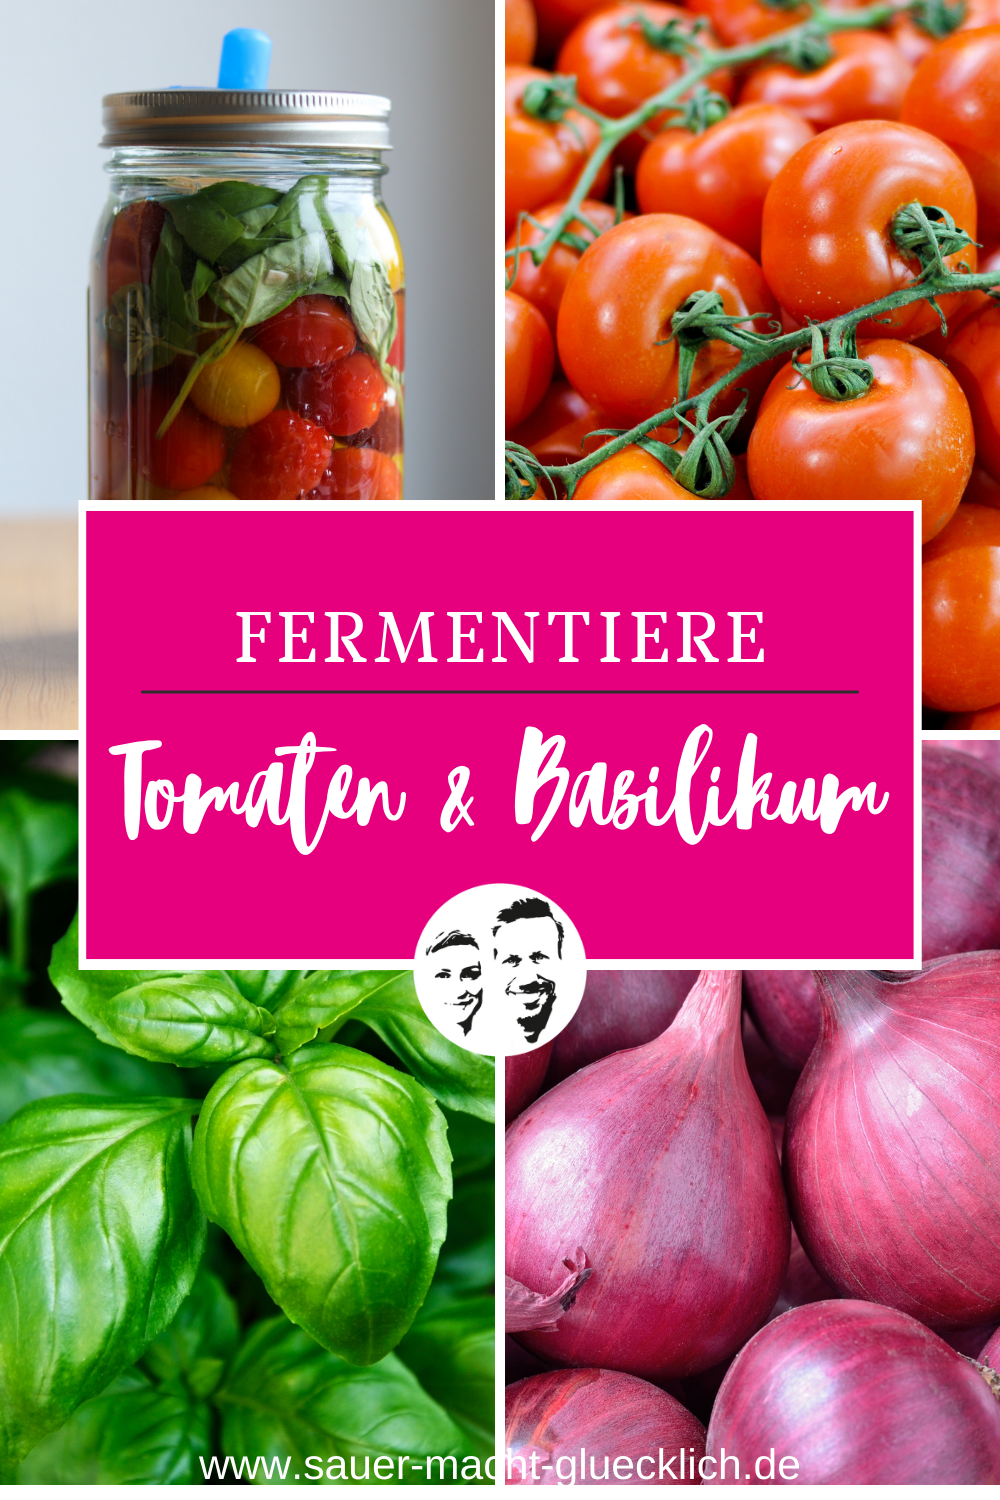 Tomaten & Basilikum - Fermentiere den italienischen Klassiker